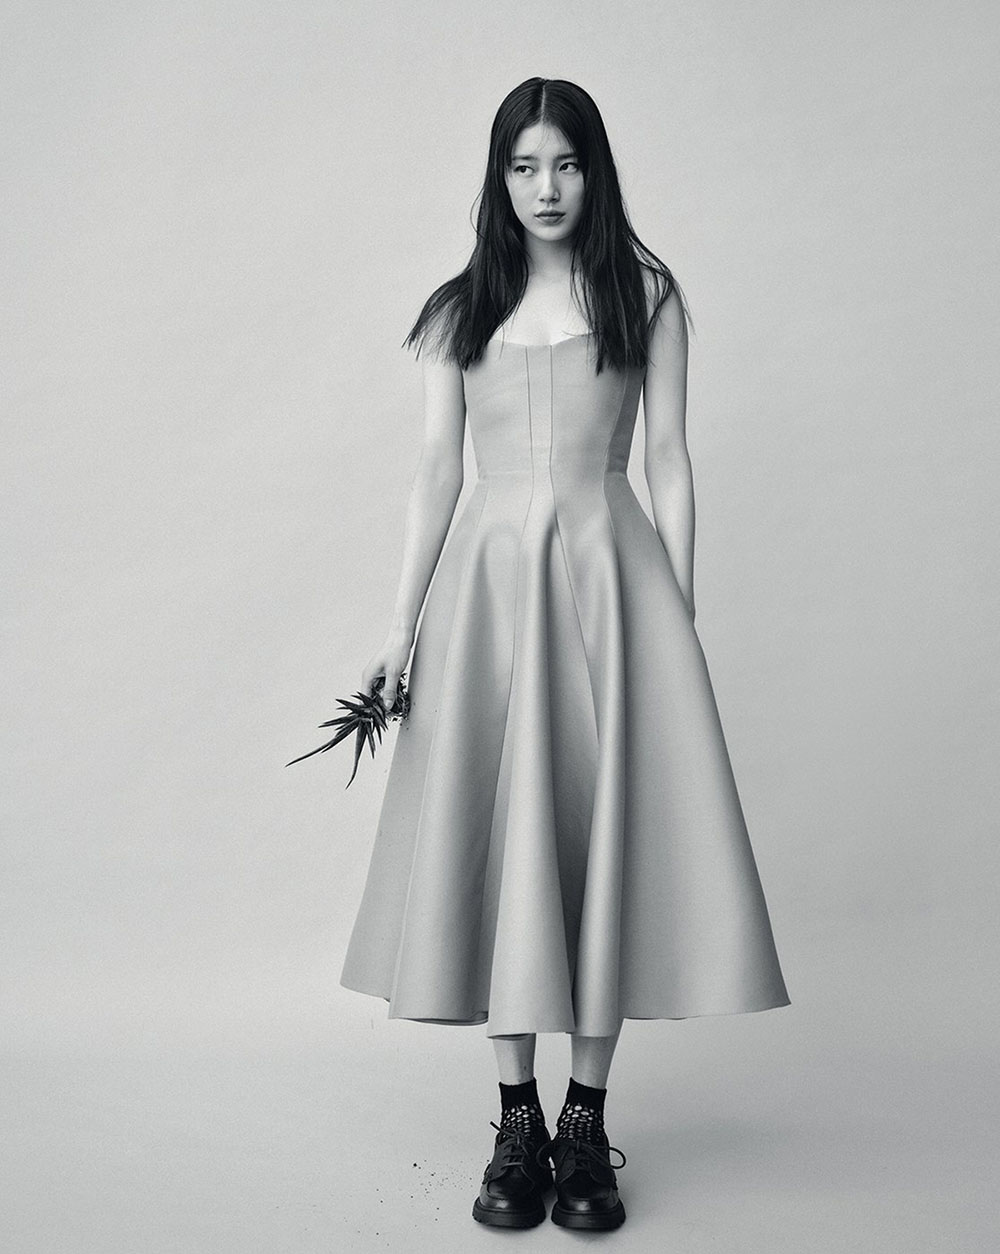 Suzy covers Vogue Korea June 2020 by Hyea W. Kang